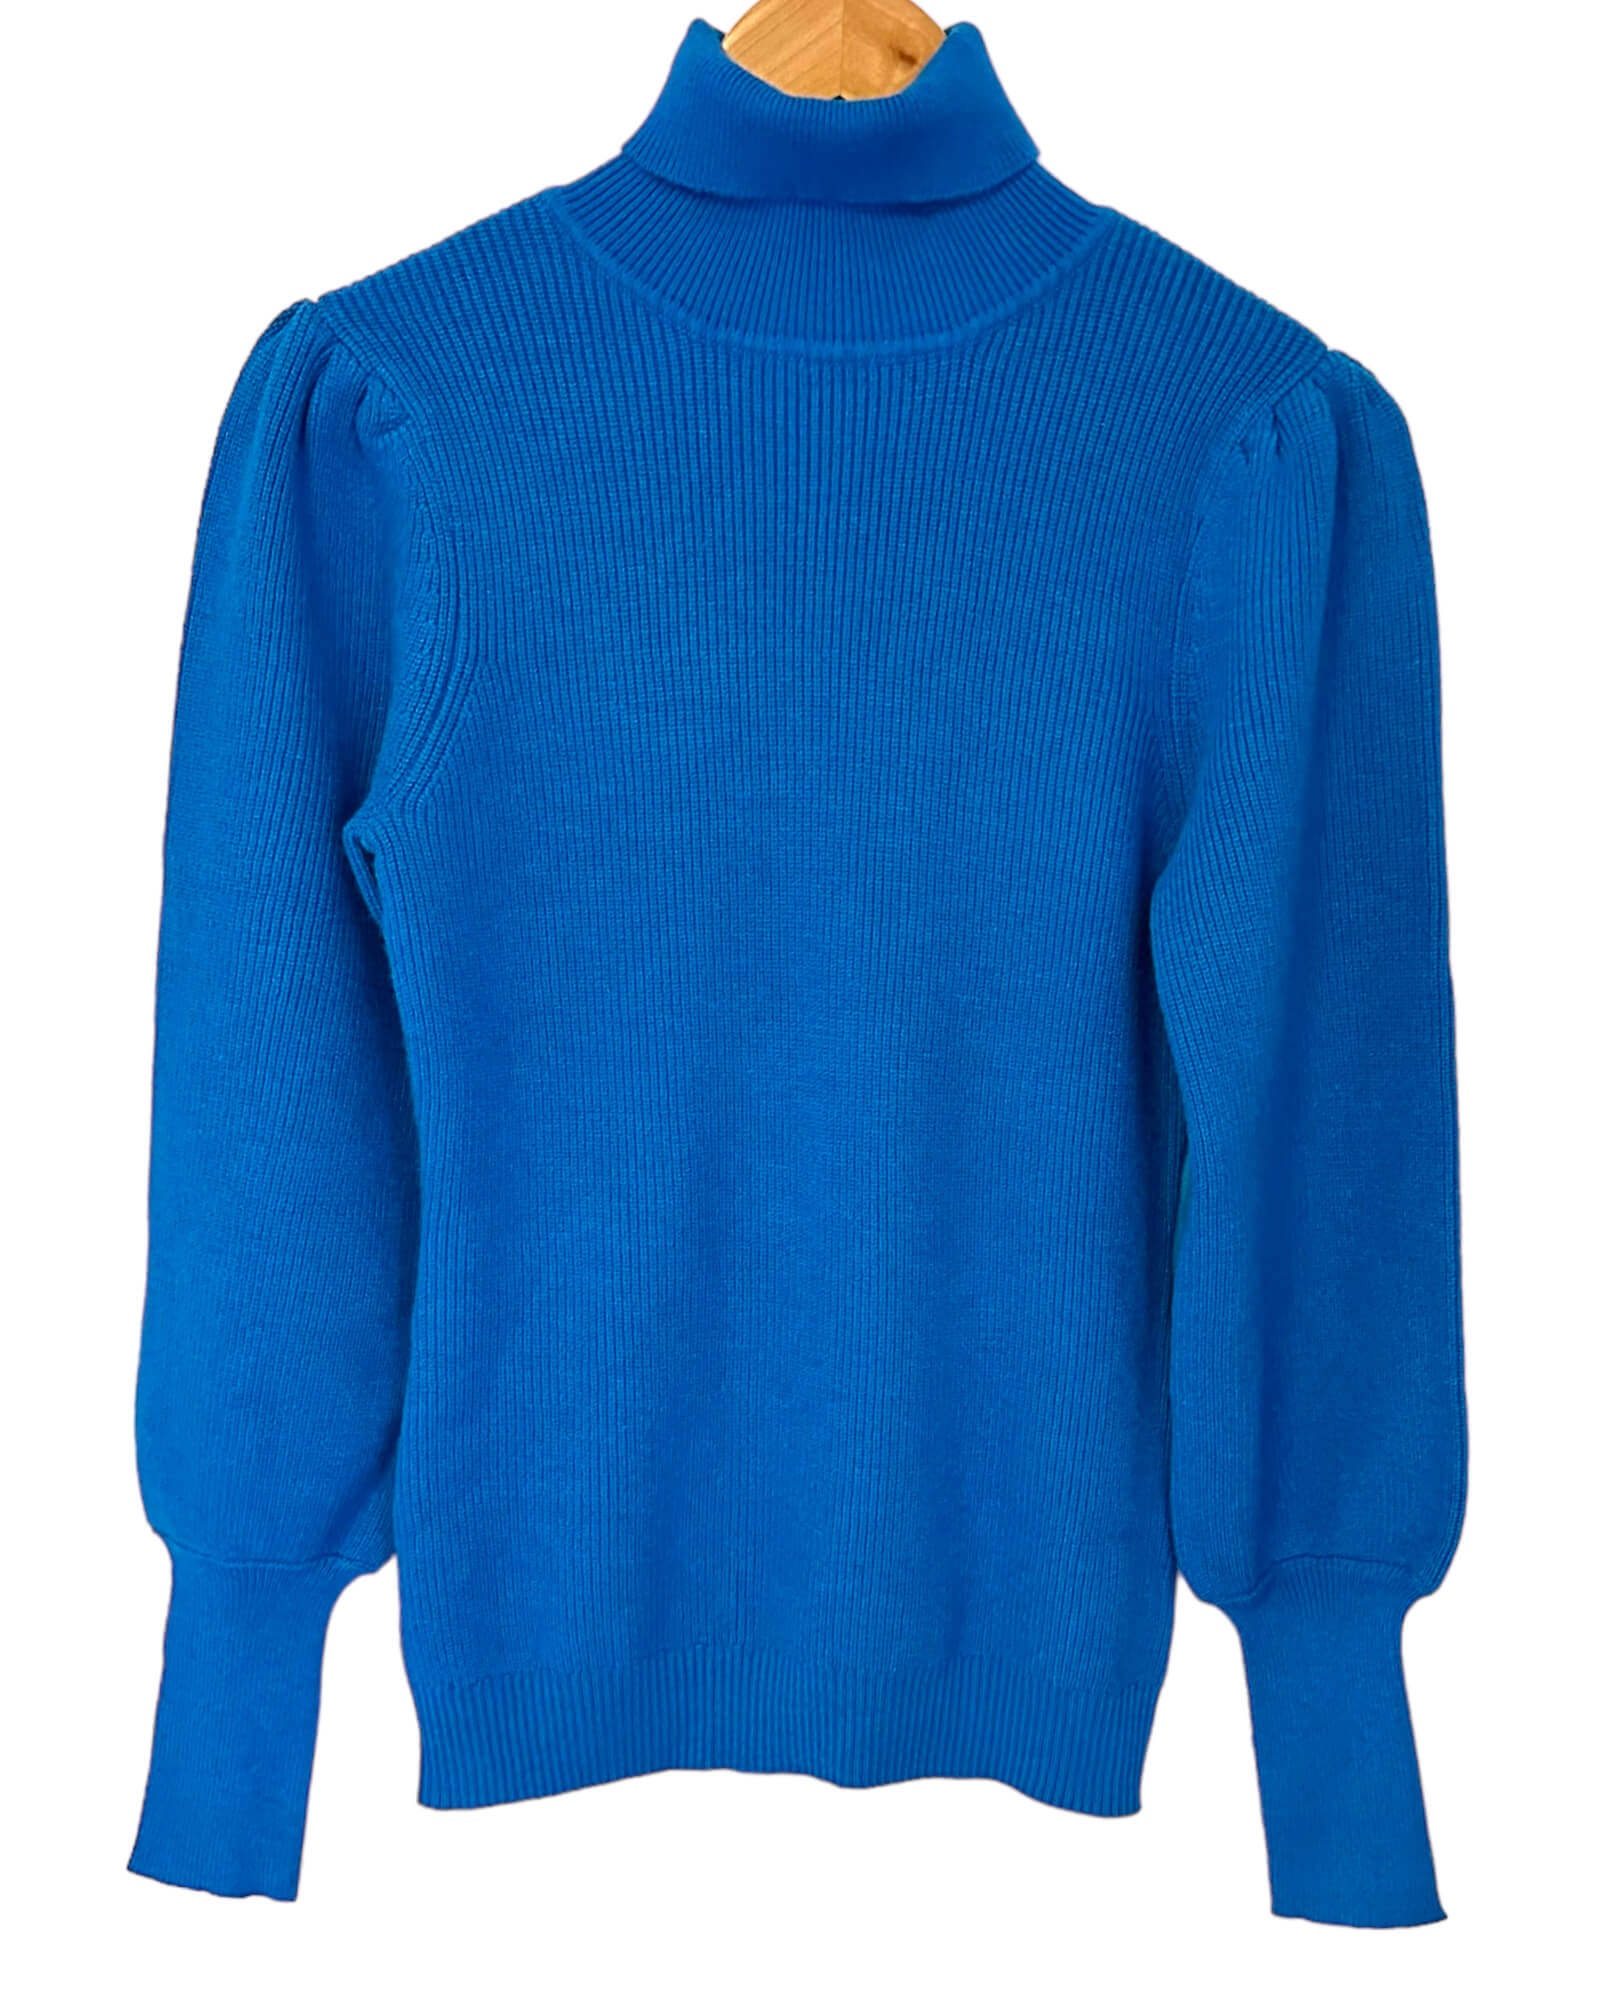 Warm Spring BOSTON PROPER director blue puff sleeve turtleneck sweater 